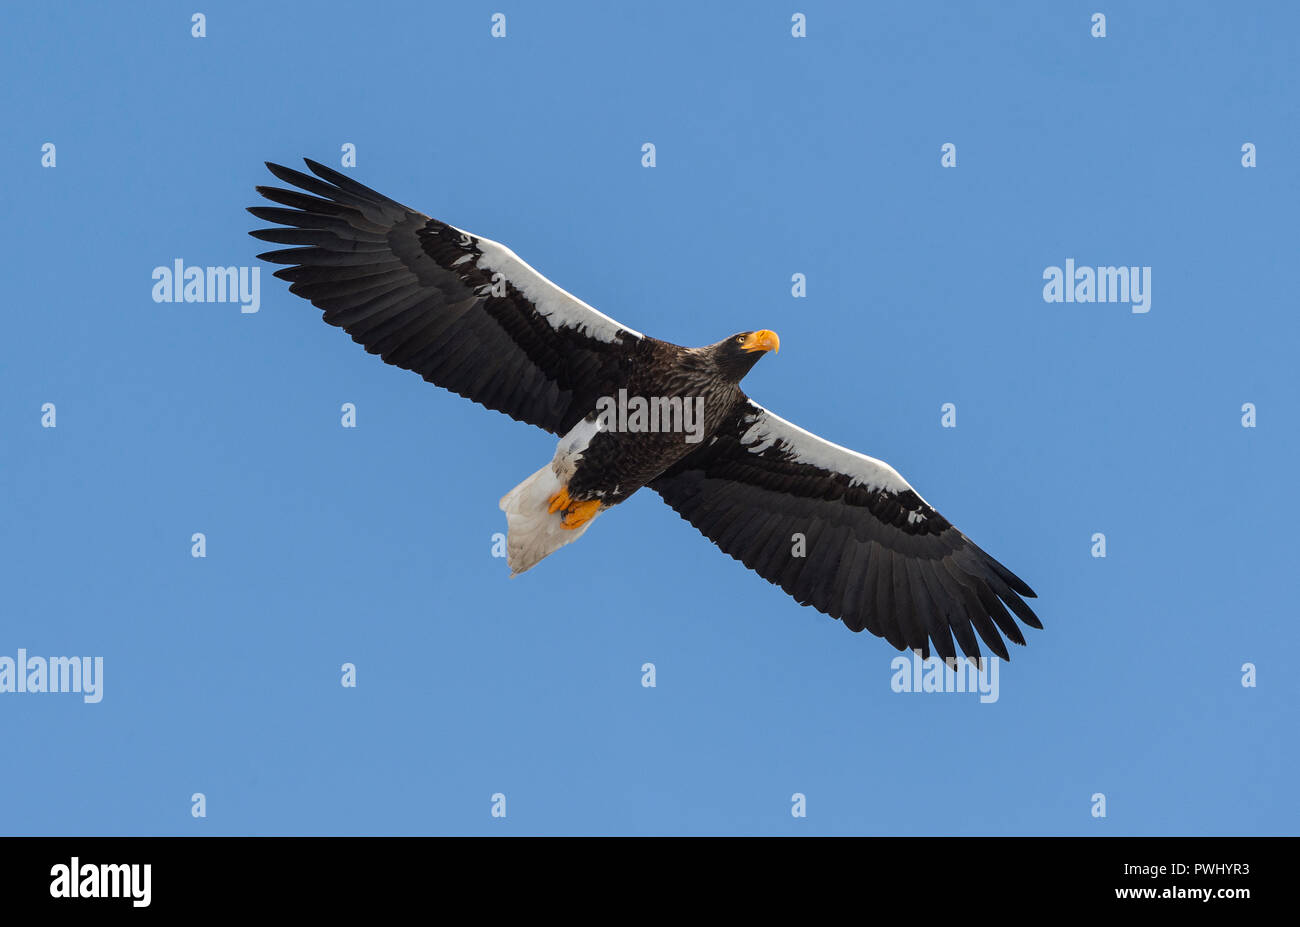 Steller's sea eagle in flight. Adult Steller's sea eagle . Scientific name: Haliaeetus pelagicus. Blue sky background. Stock Photo